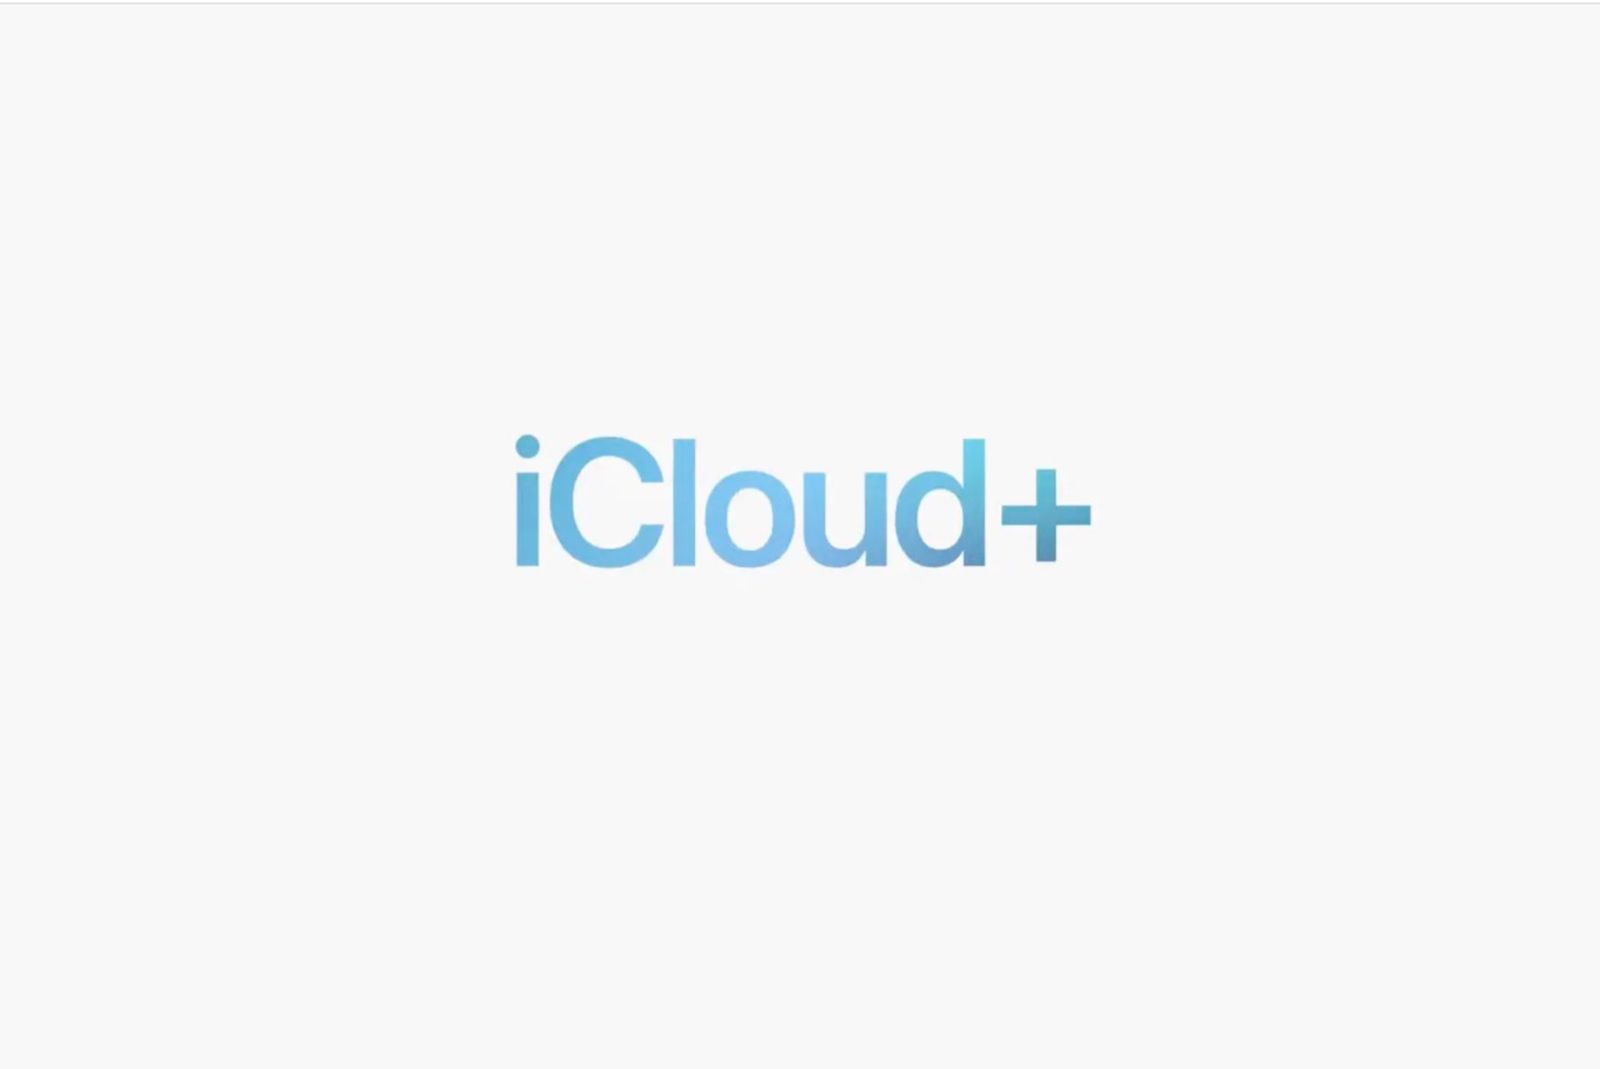 iCloud+ کیا ہے اور یہ کیسے کام کرتا ہے؟  ایپل کی نئی کلاؤڈ سروس نے تصویر 6 کی وضاحت کی۔